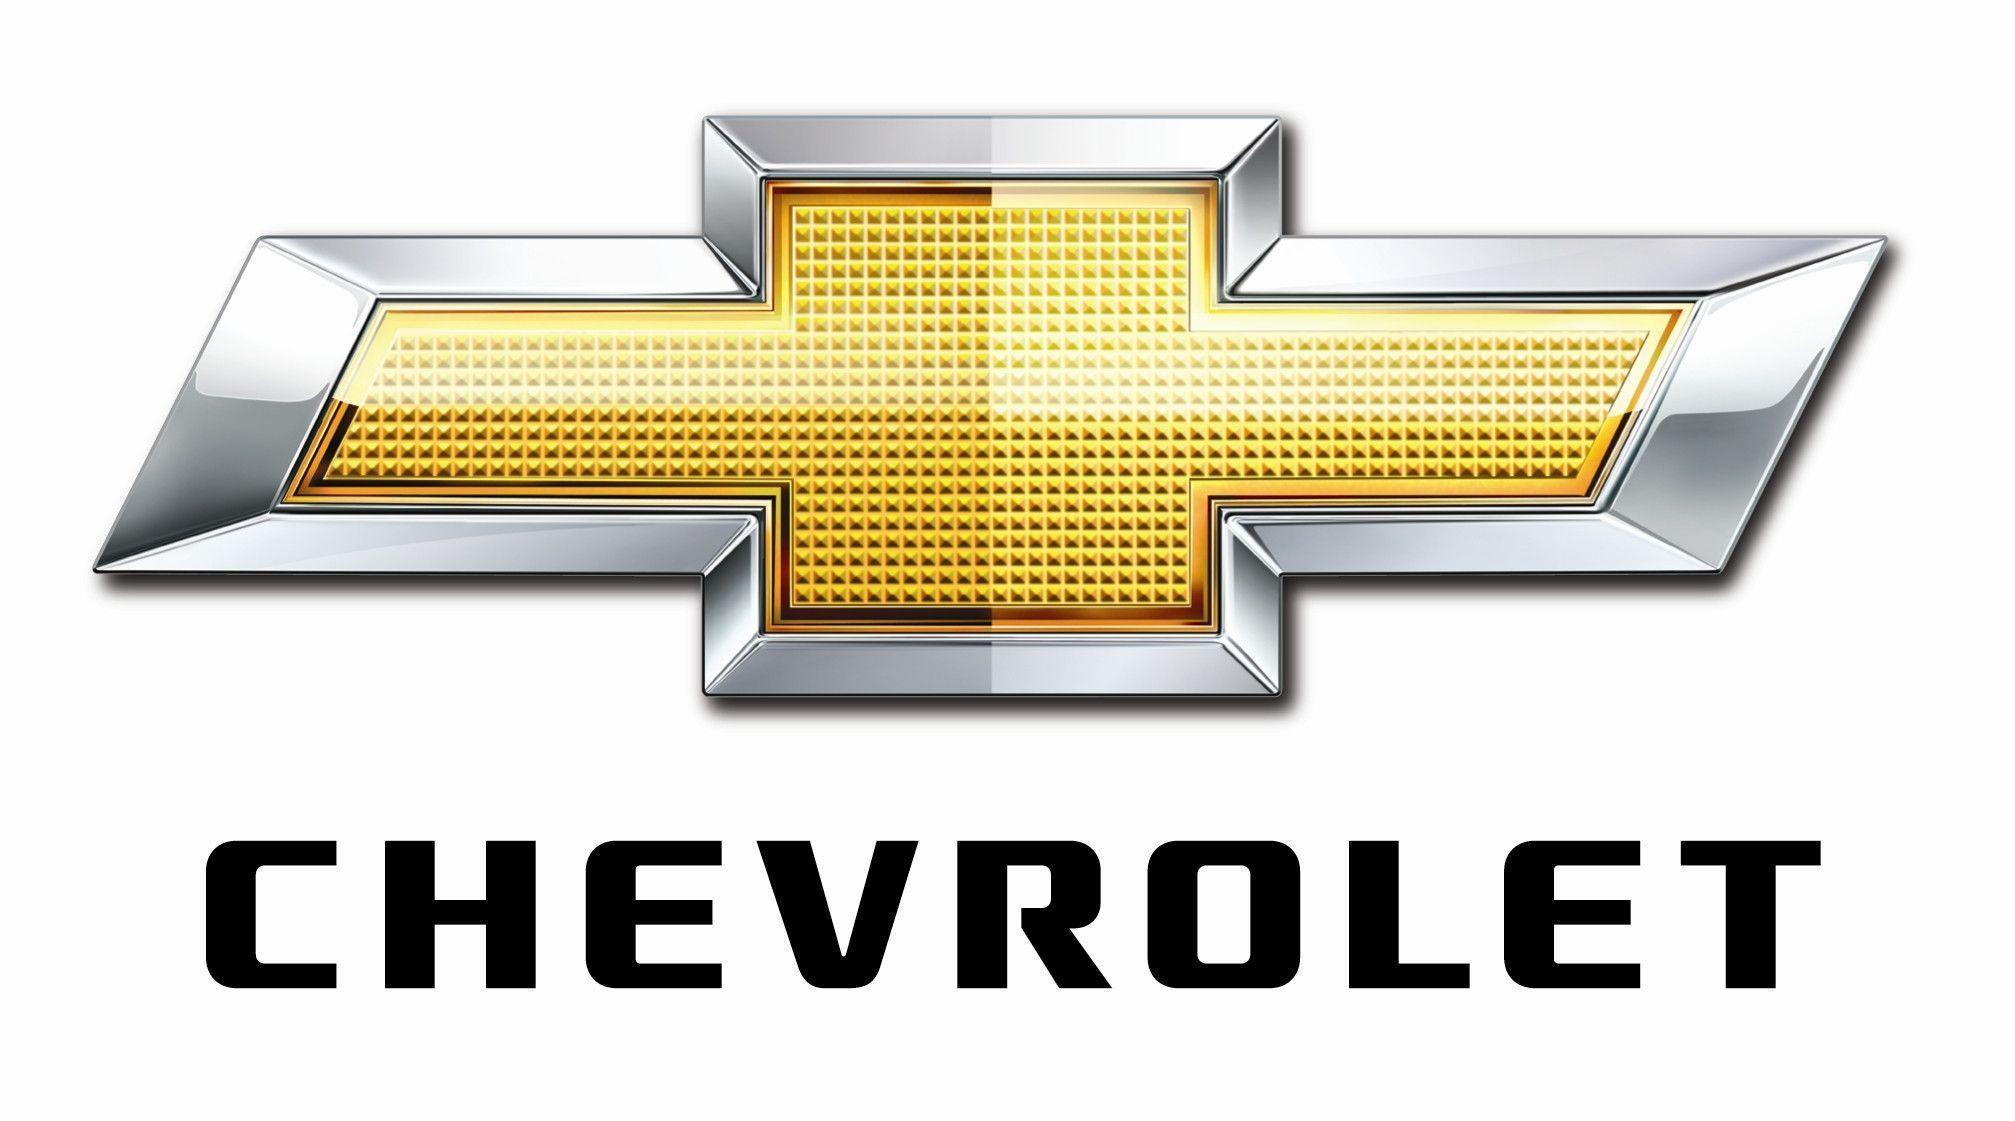 Chevy Logo 67 149596 Image HD Wallpaper. Wallfoy